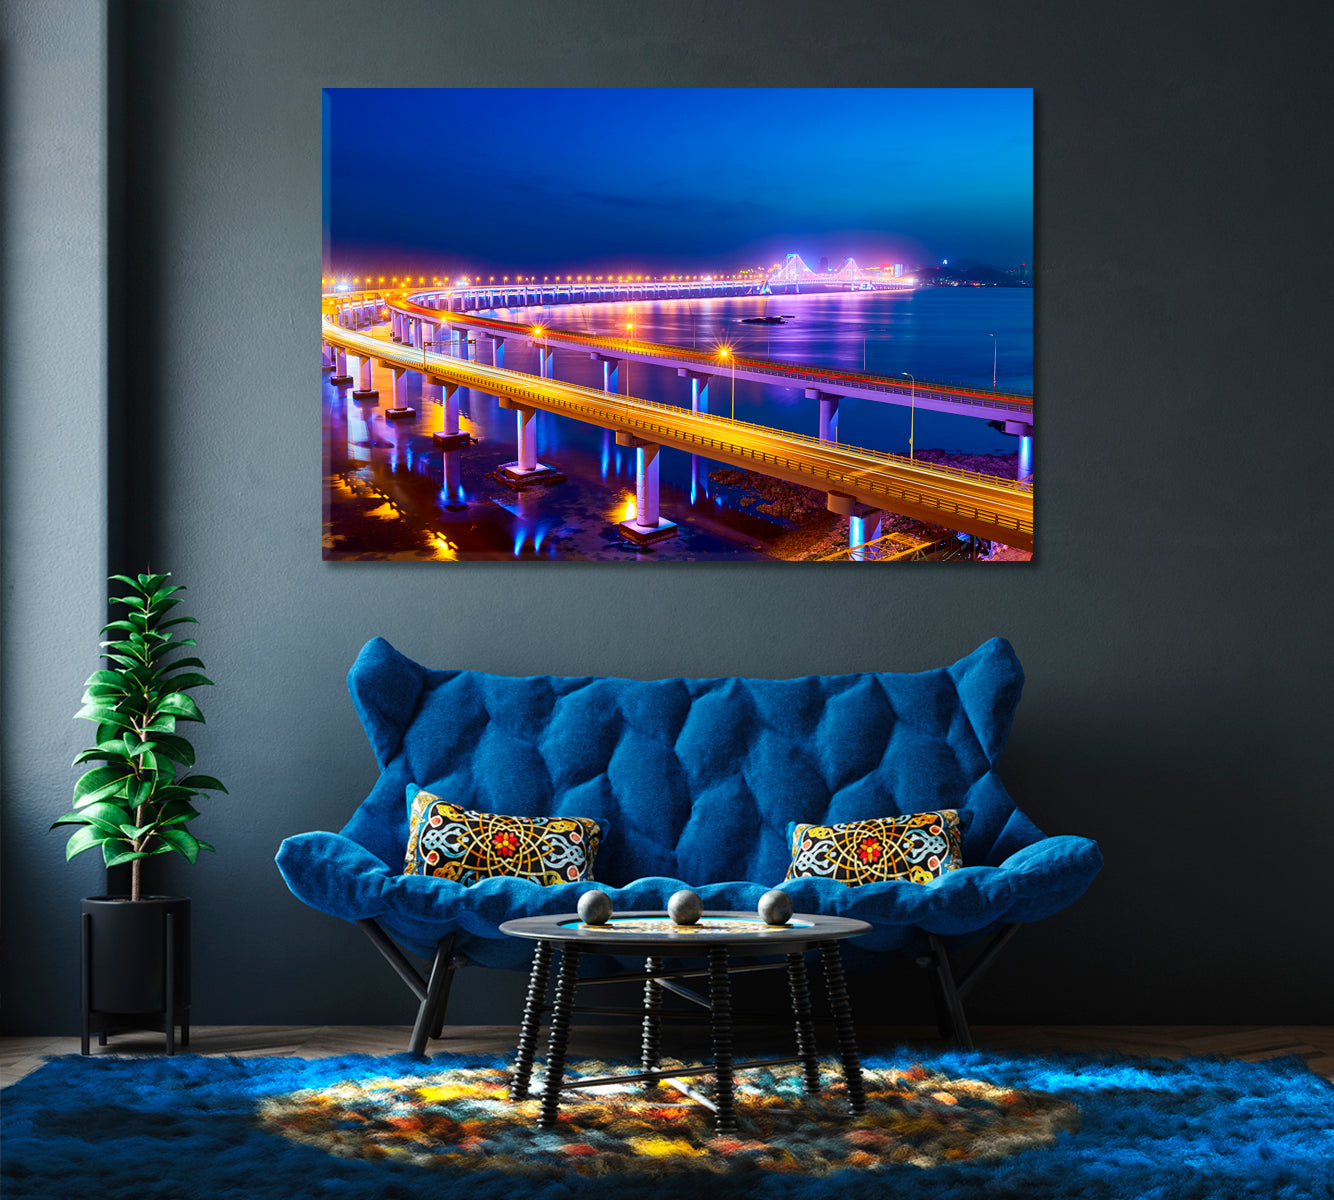 Hangzhou Bay Bridge China Canvas Print-Canvas Print-CetArt-1 Panel-24x16 inches-CetArt